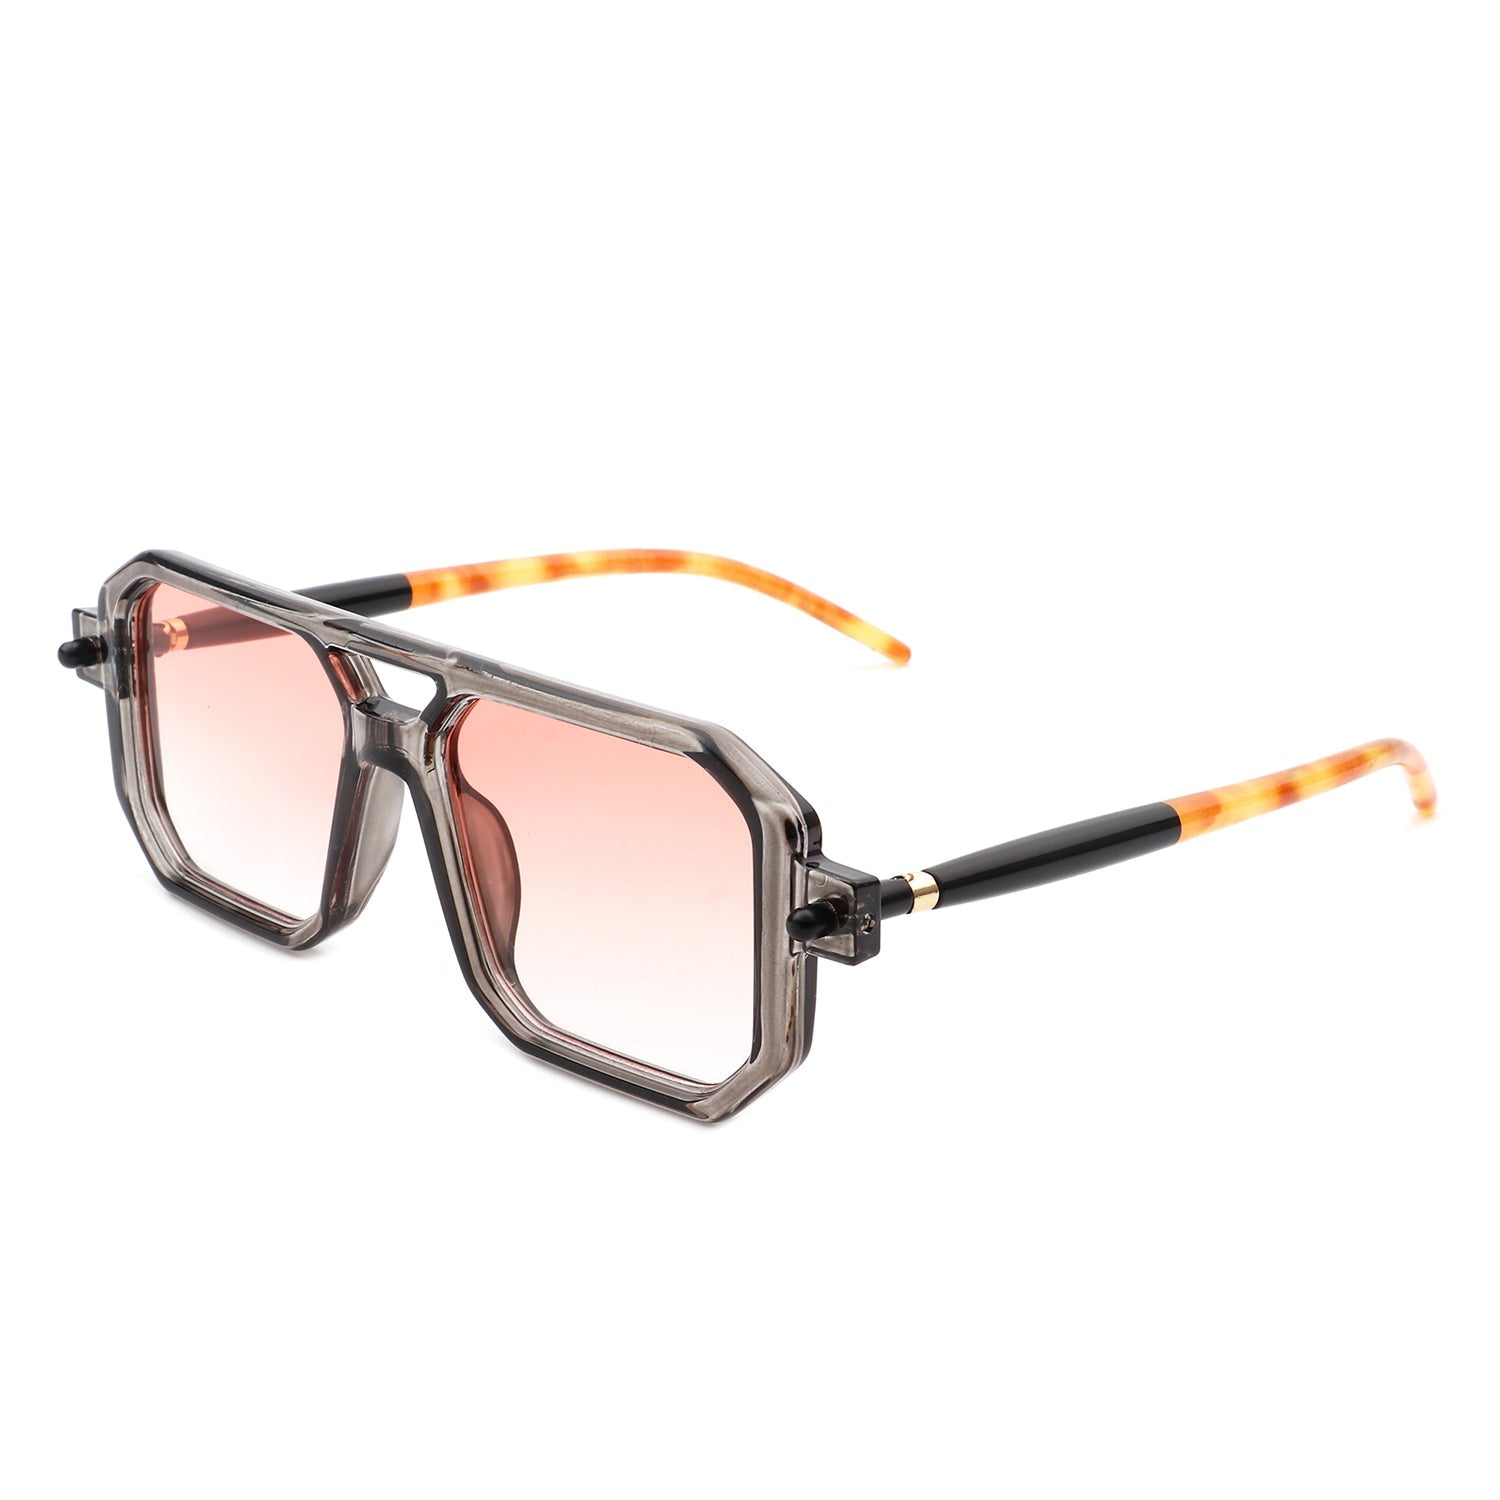 Bluebird - Retro Square Flat Top Brow-Bar Fashion Sunglasses-8